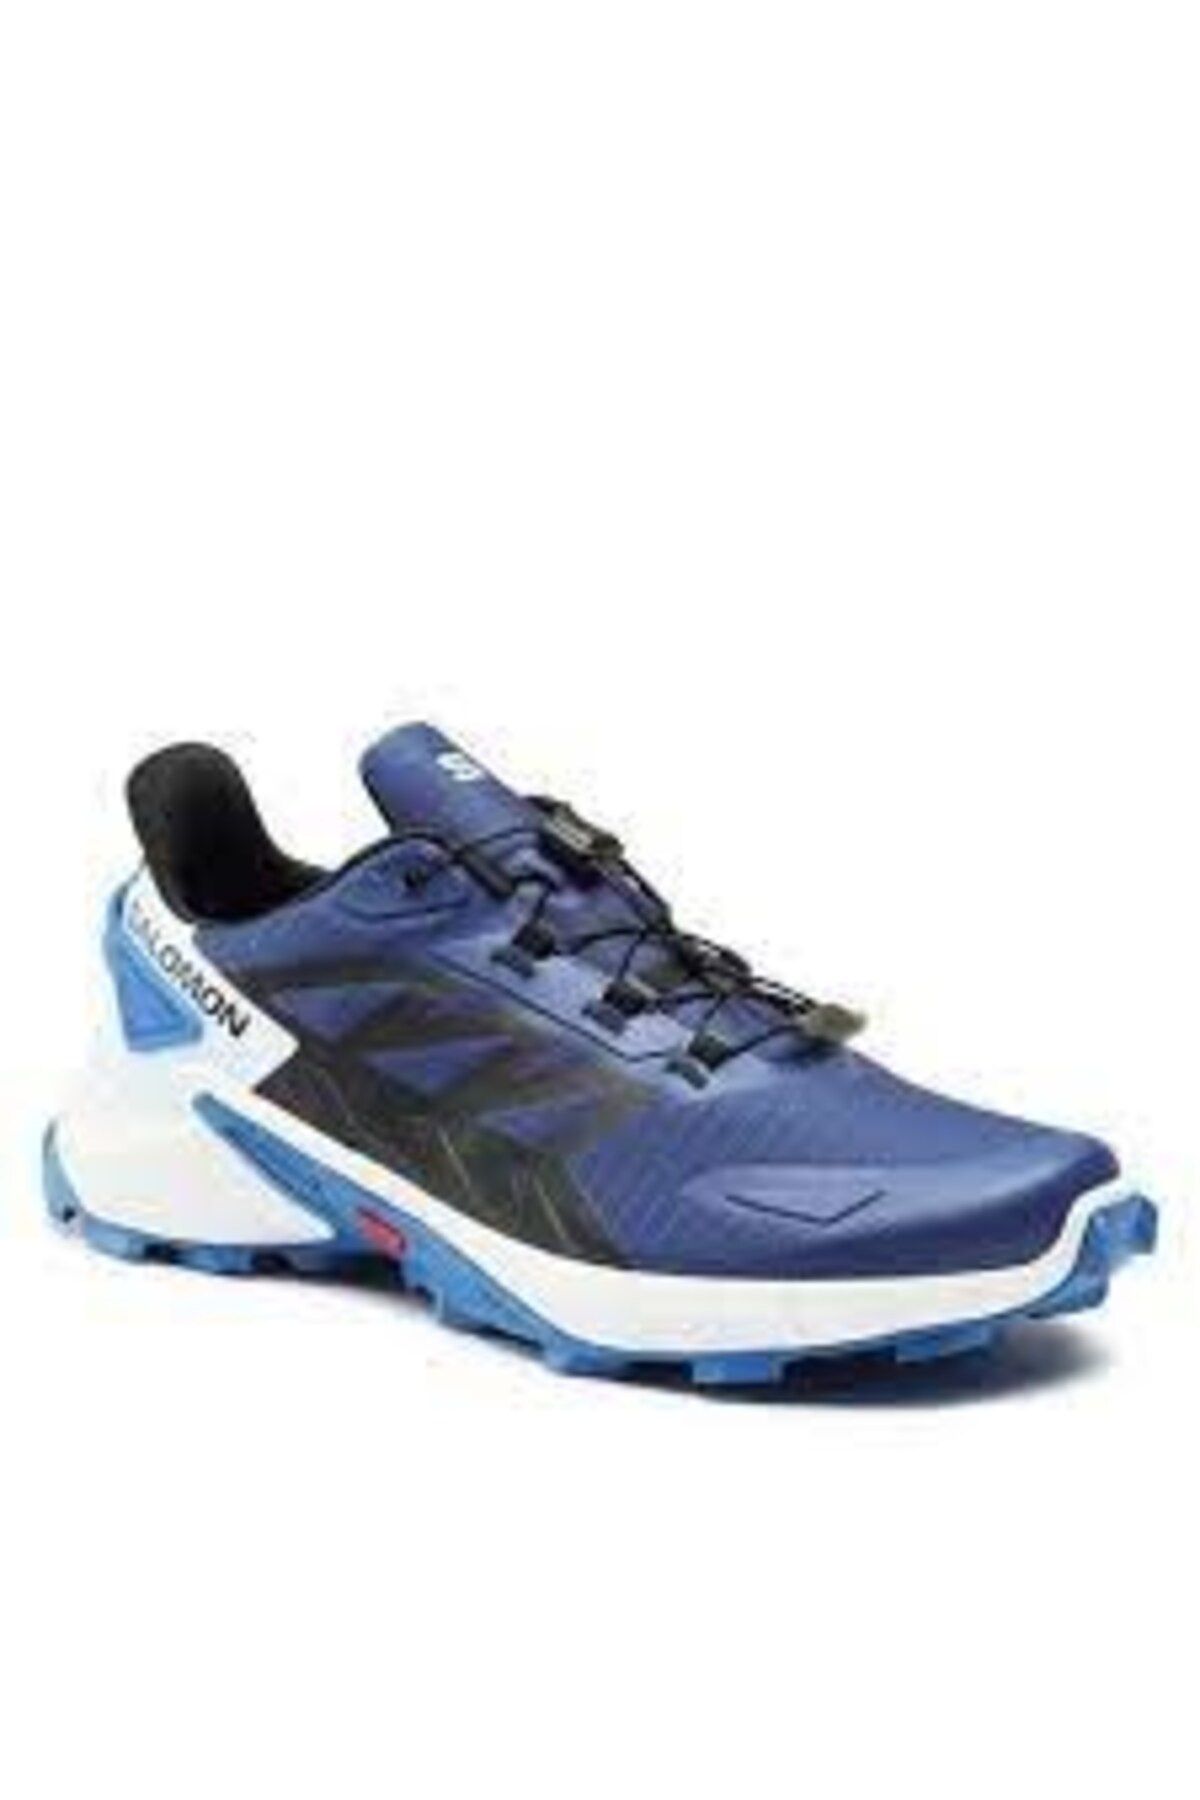 Salomon Supercross 4 Blue Print/black/lapis Blue Erkek Patika Koşusu Ayakkabısı L47315700